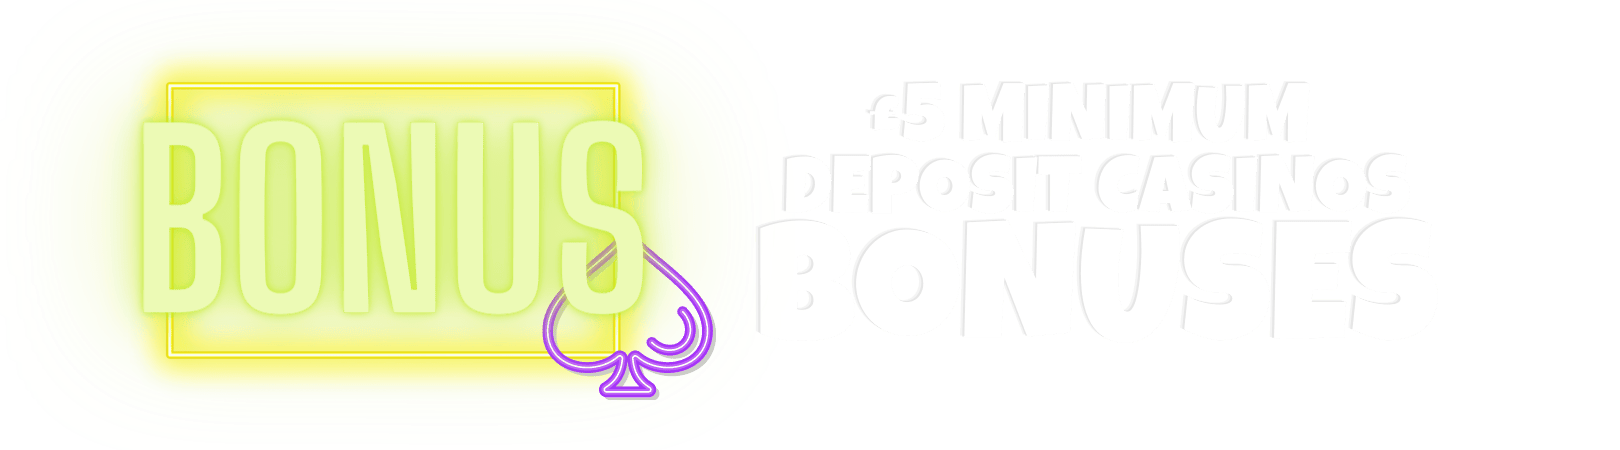 Types of Bonuses You Can Get at £5 Minimum Deposit Casinos img